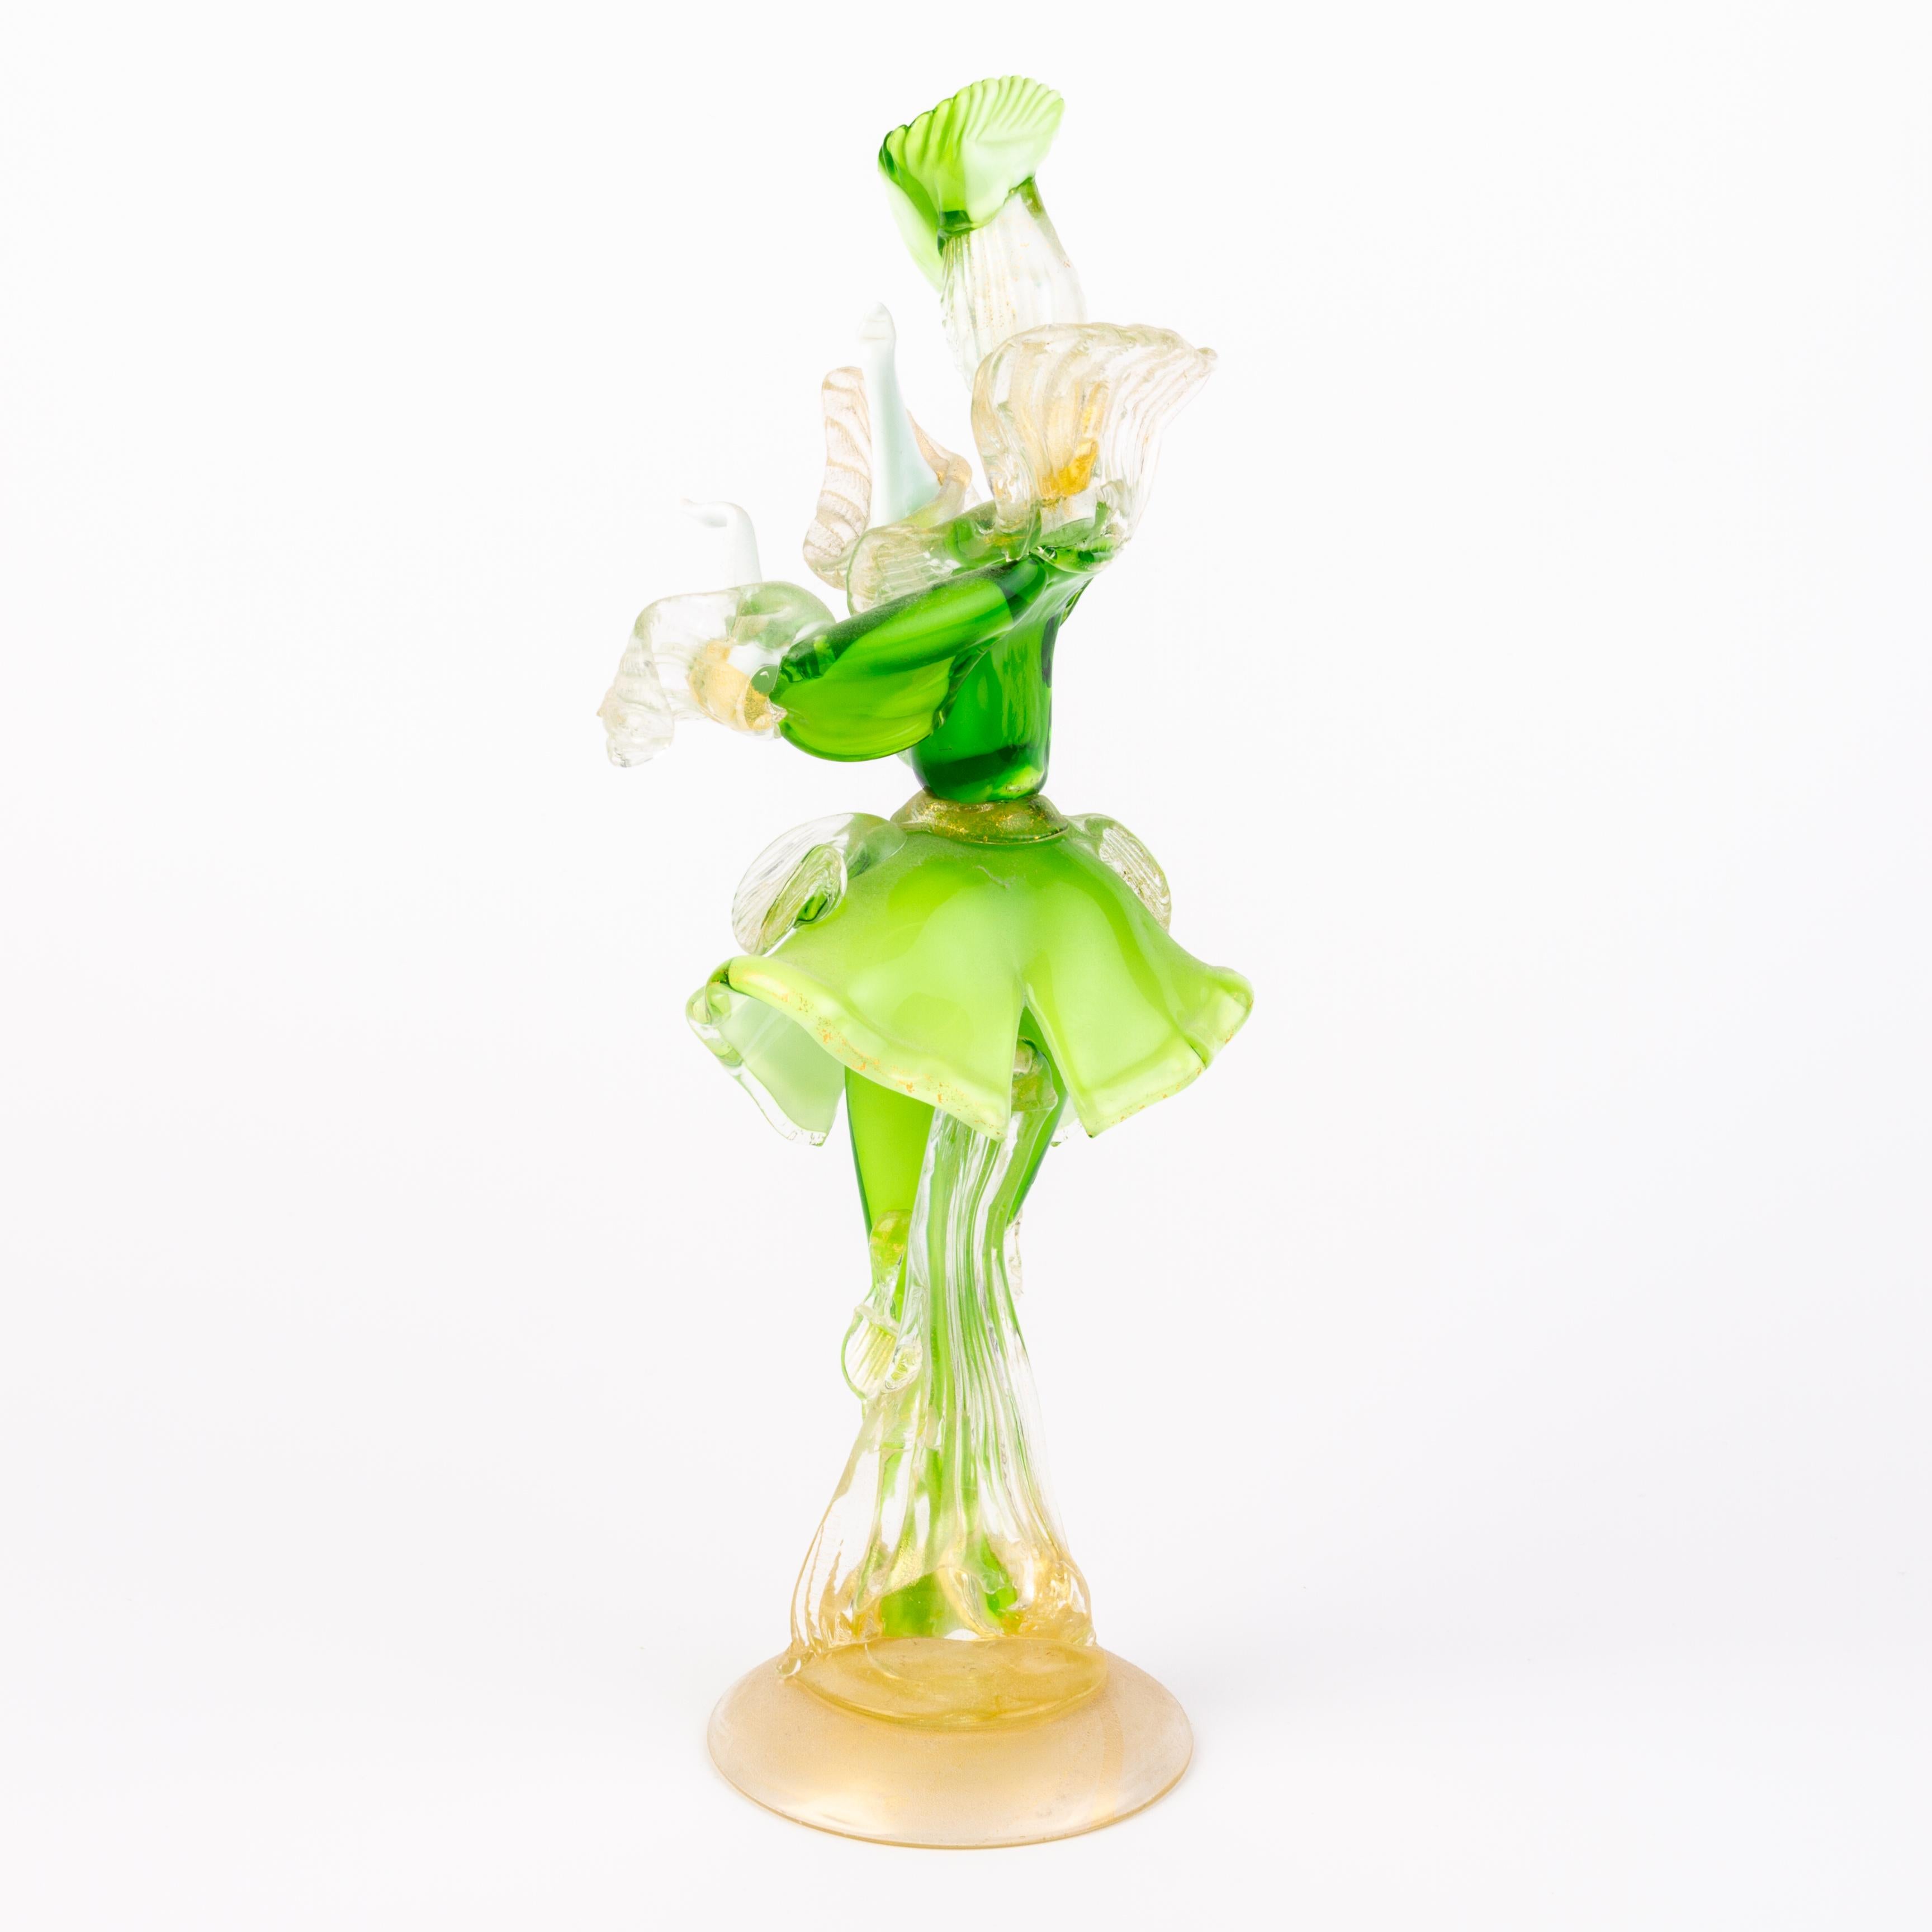 20th Century Murano Venetian Glass Sculpture Dancer For Sale